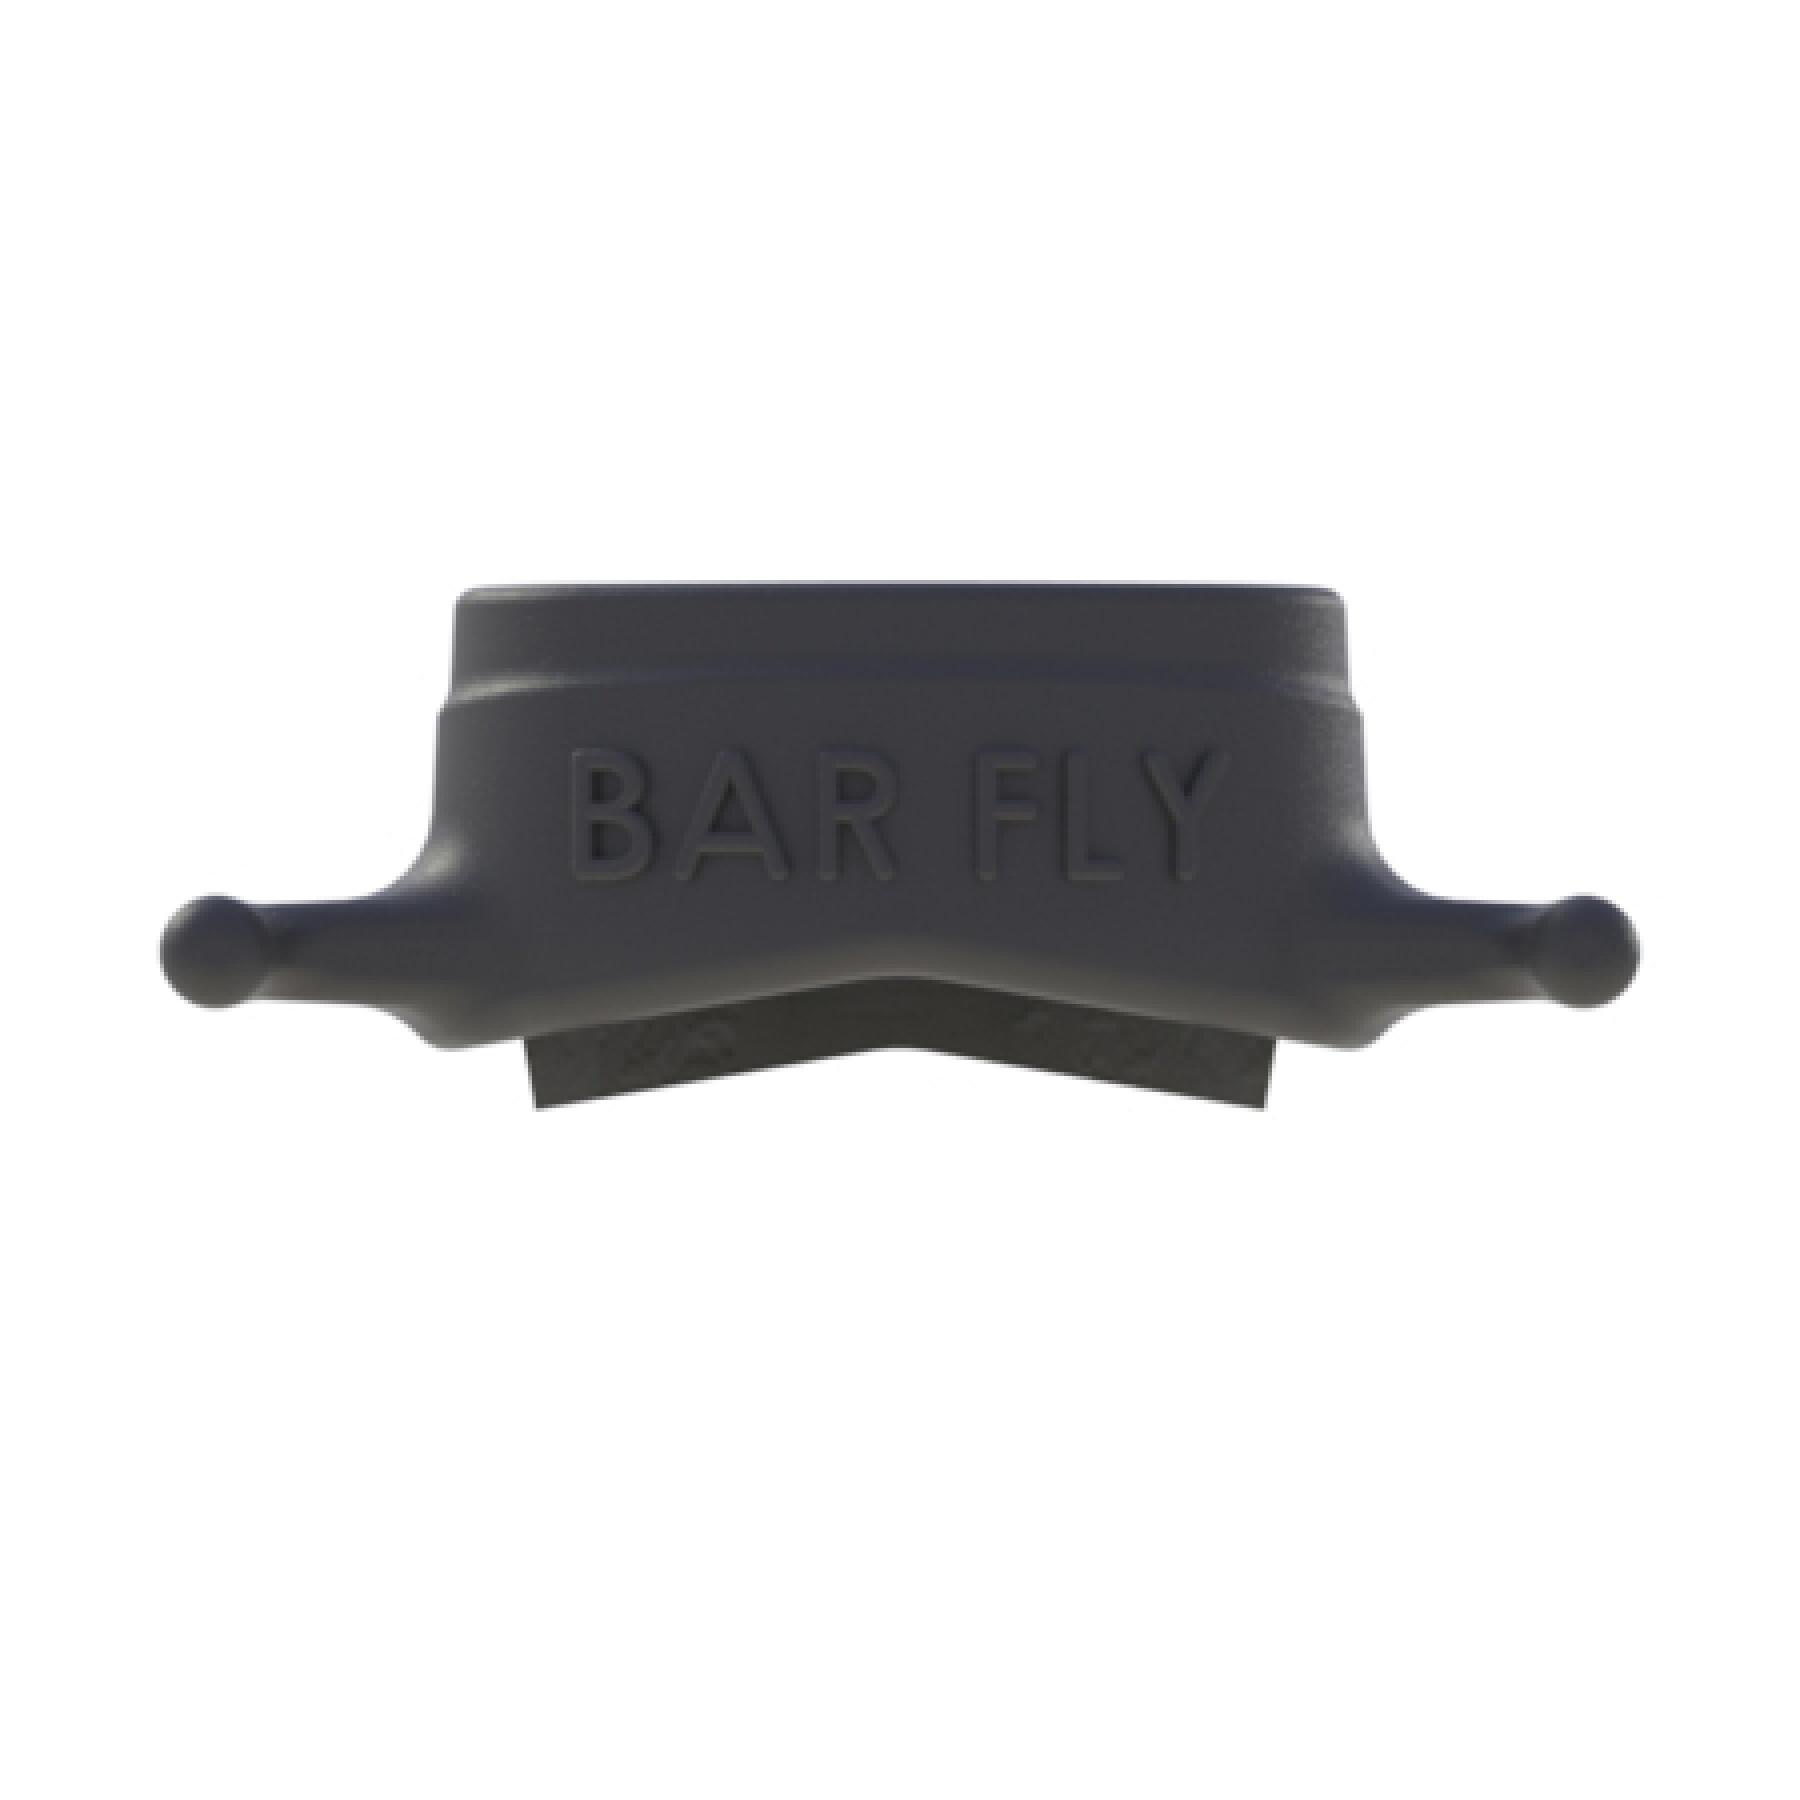 Voorste steun Barfly The Bar Fly 4 Light BAM